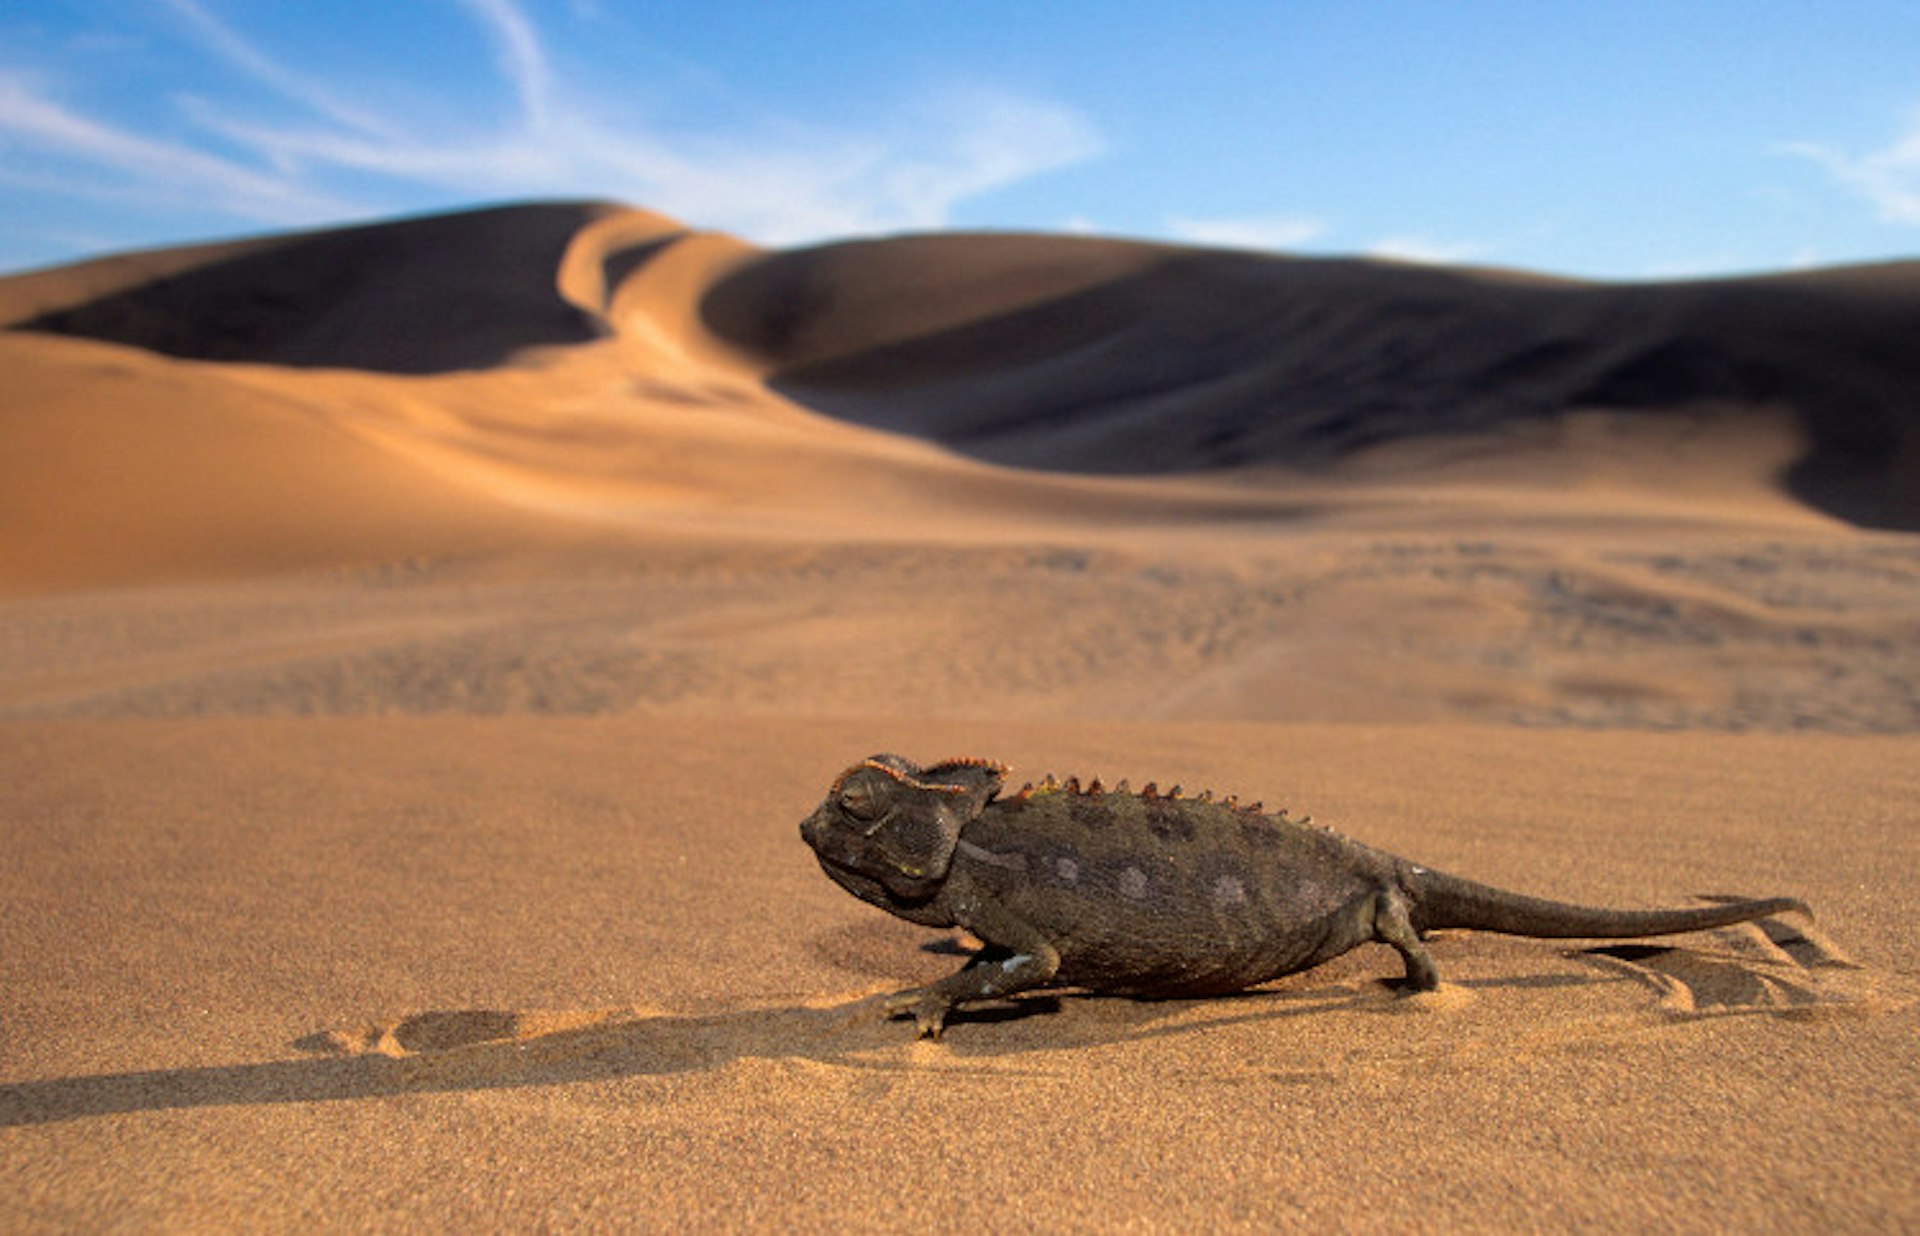 A Namaqua chameleon walking across the Namib Desert, Namibia. Image by Nigel Dennis